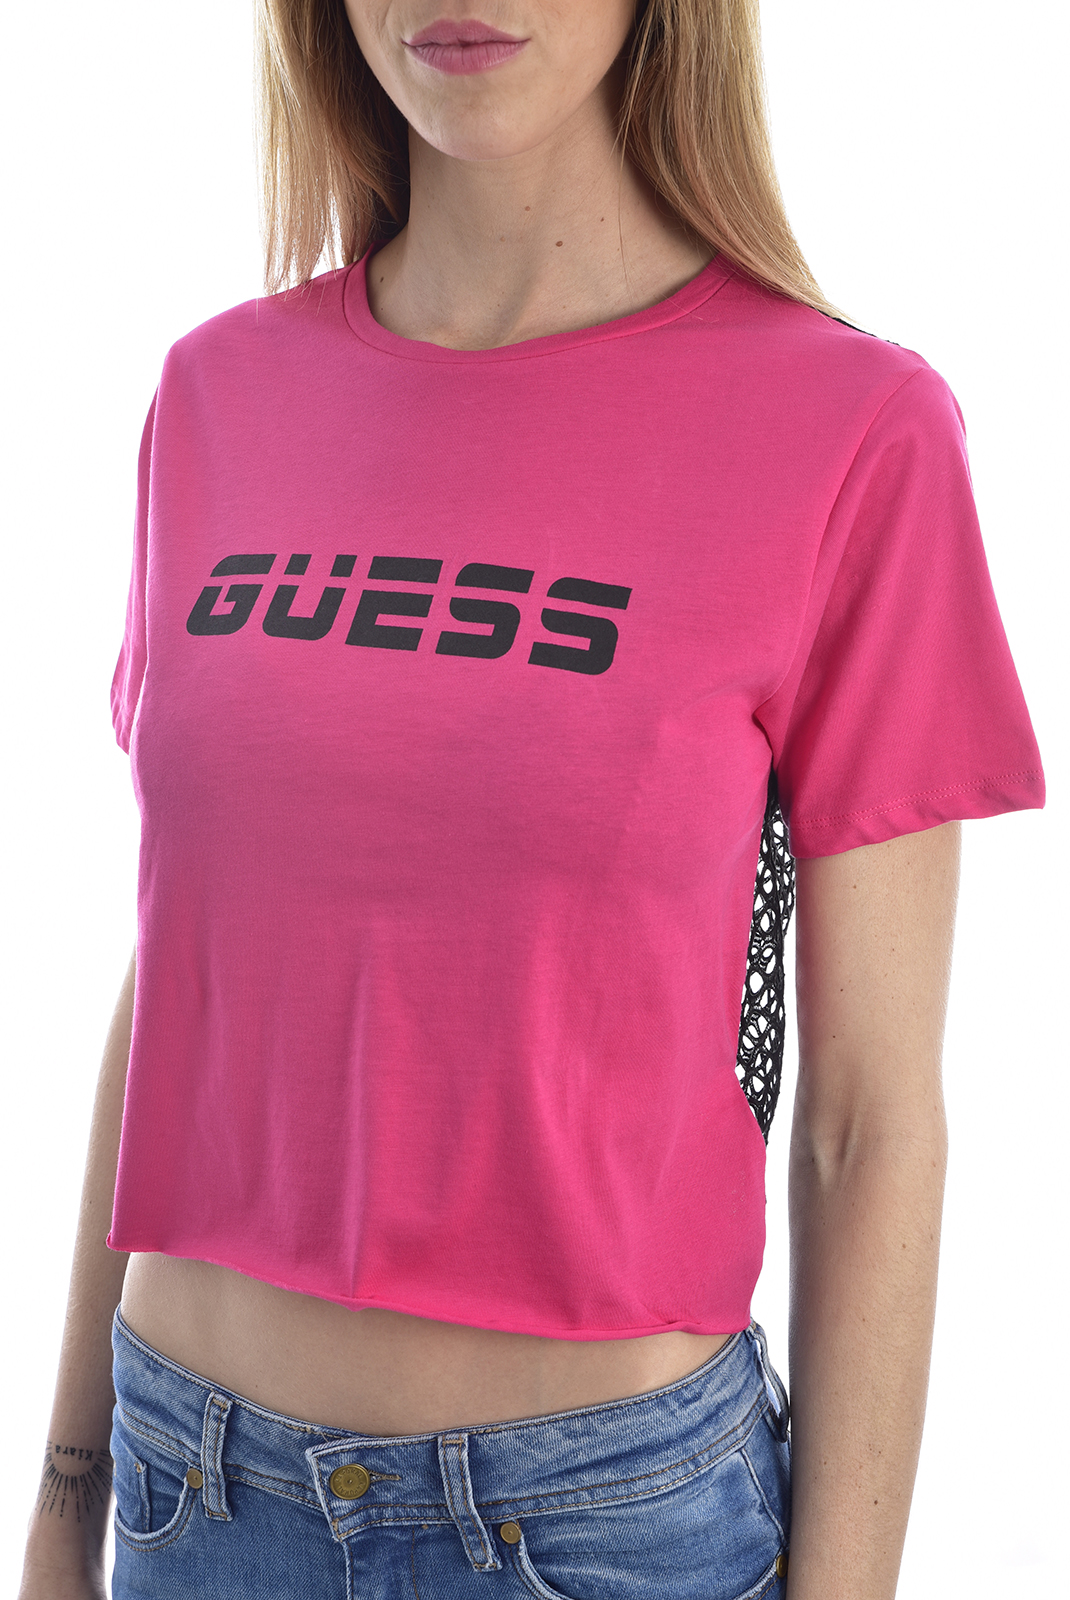 Tee-shirt rose pour femme à manches courtes Guess - O02a22